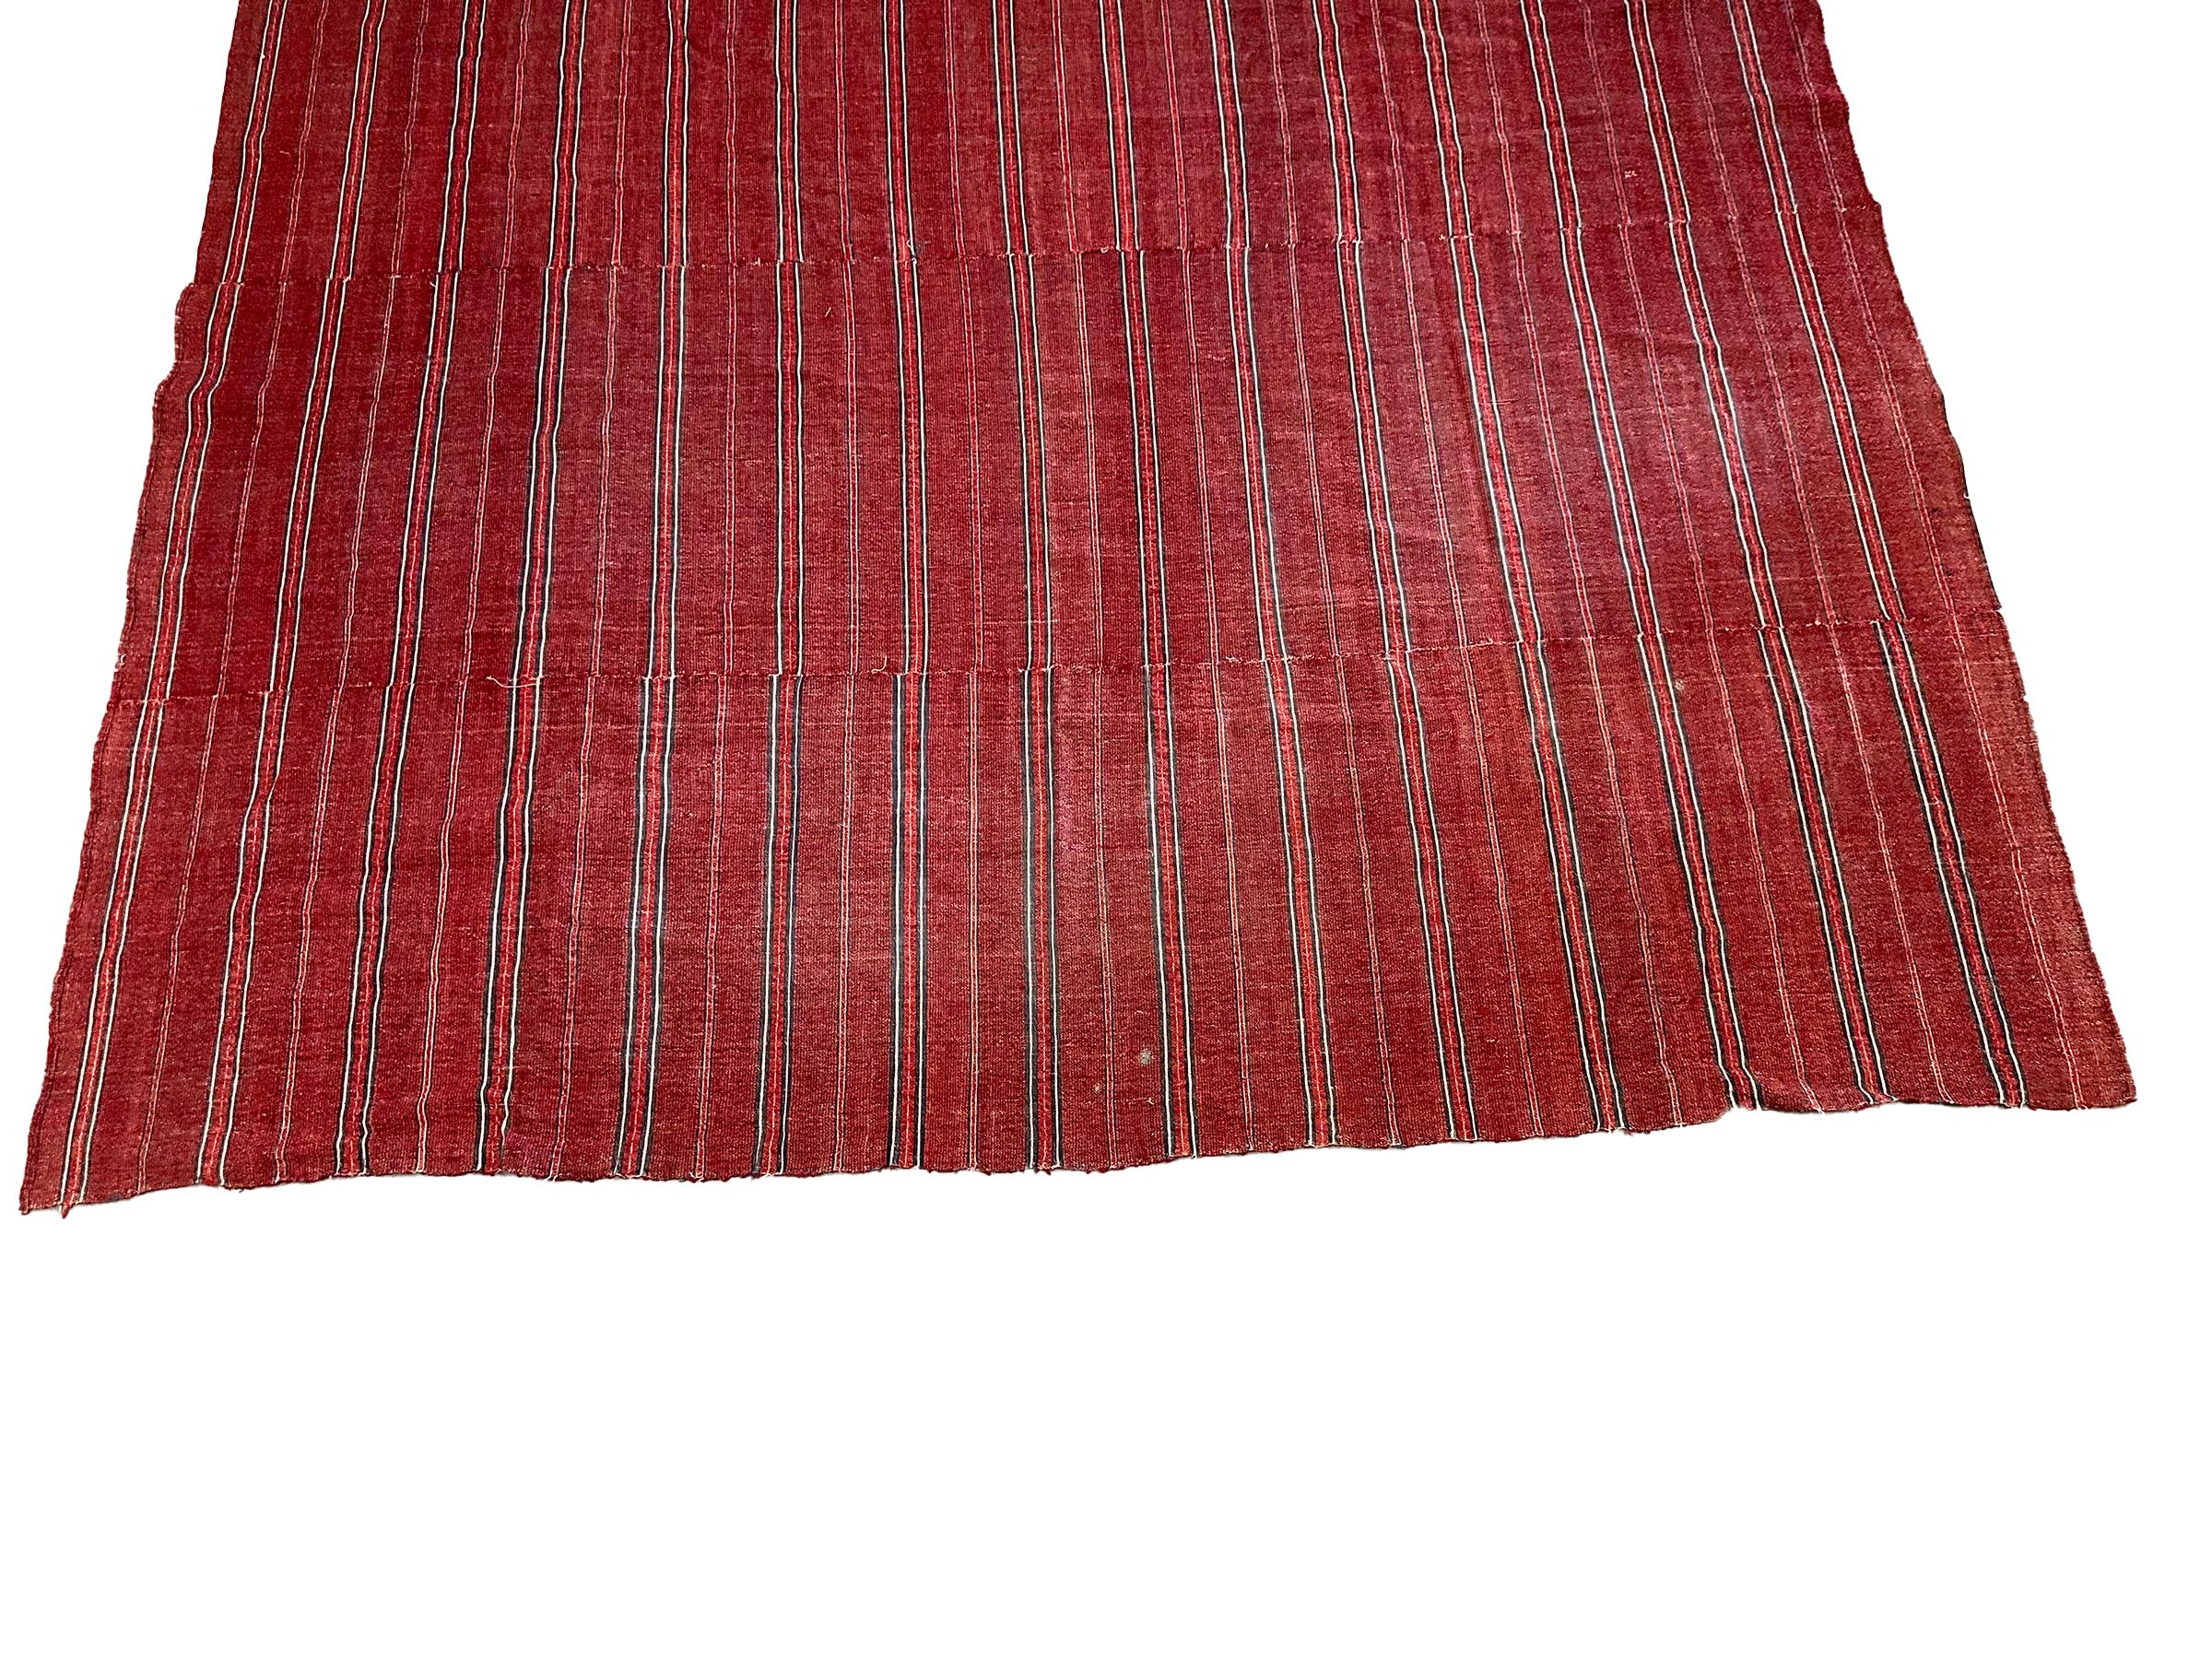 Asian Antique Moroccan Kelim Kilim Rug Tapestry Handmade 6x8 178cm x 226cm For Sale